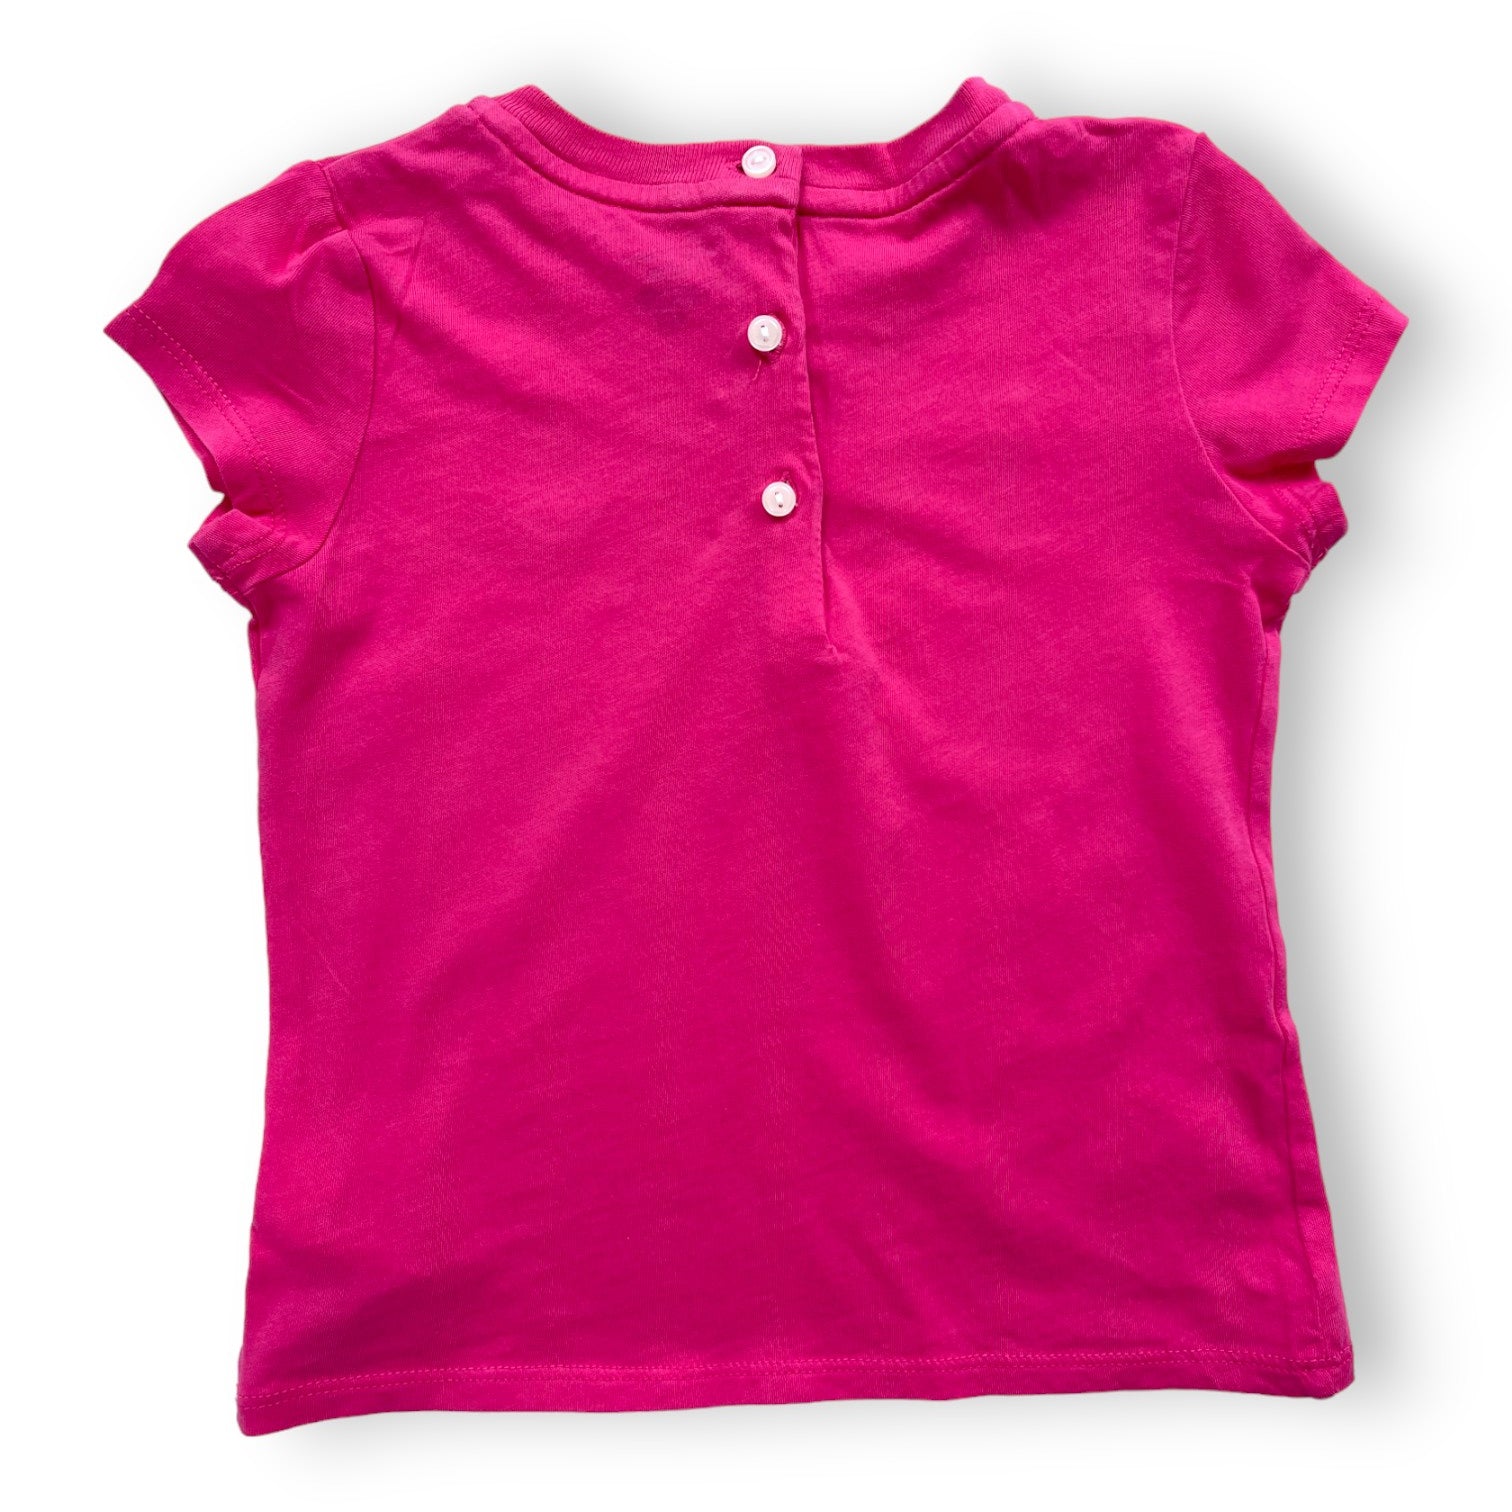 RALPH LAUREN - T shirt manches courtes rose à motifs - 2 ans